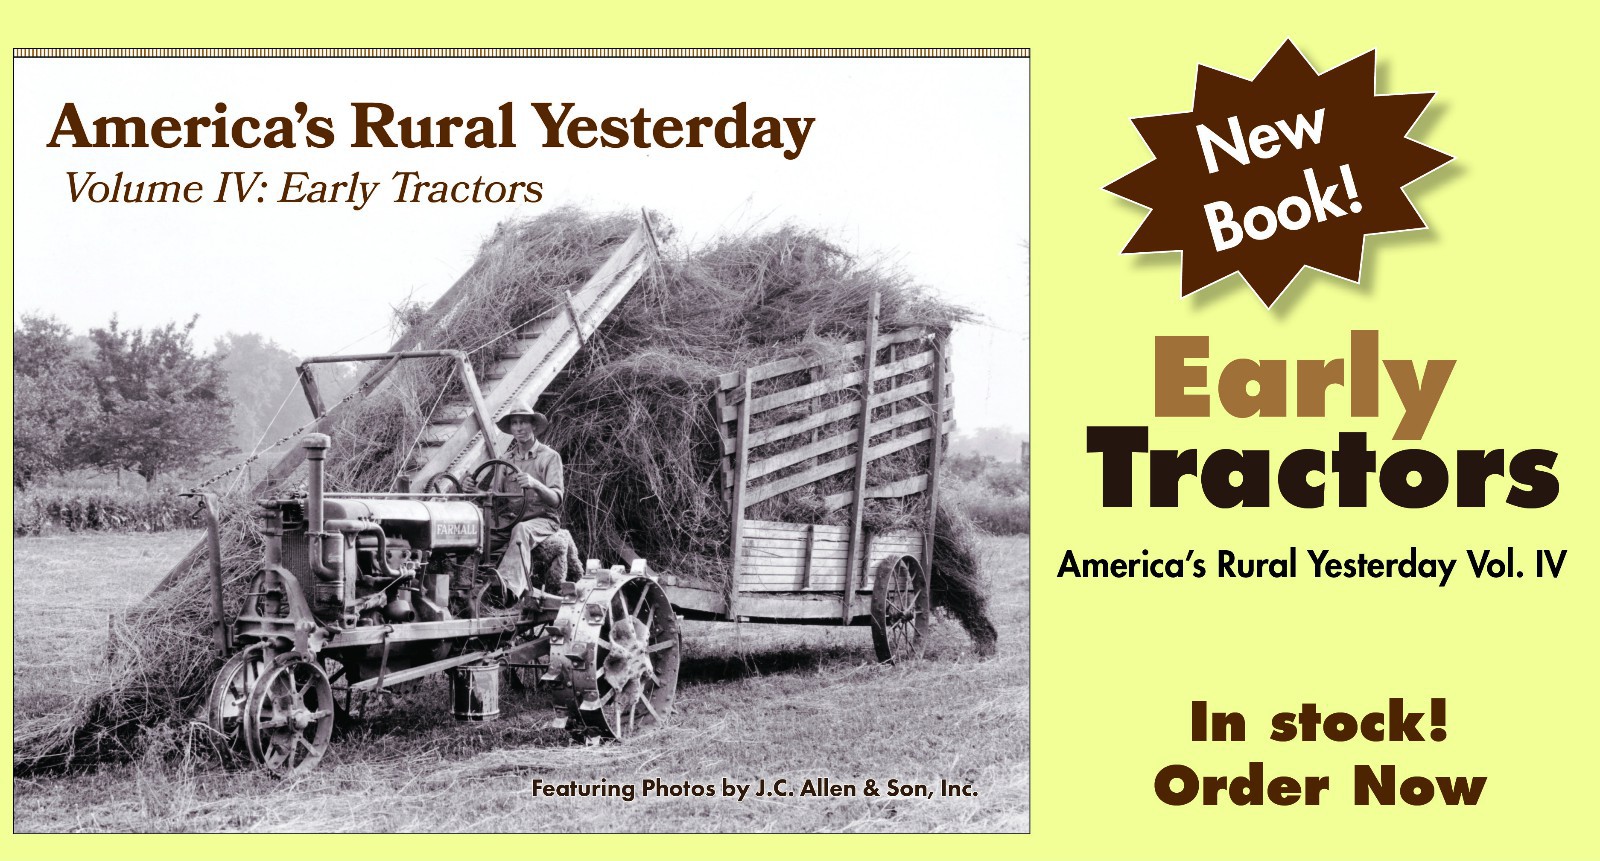 America's Rural Yesterday Volume IV